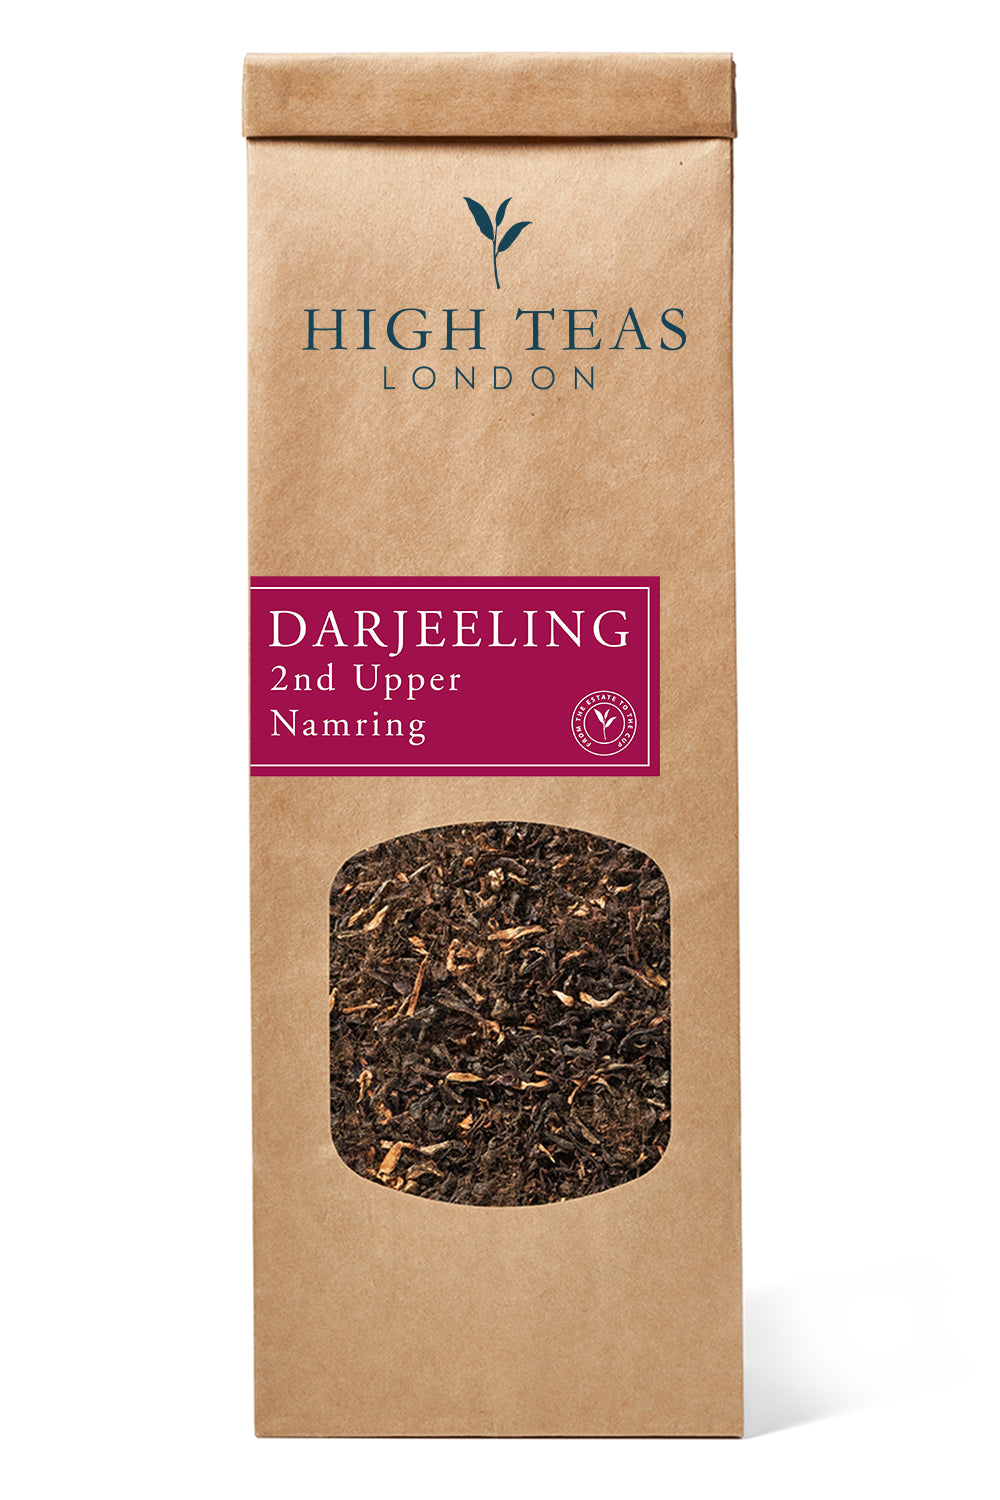 Darjeeling 2nd Upper Namring TGFOP1-50g-Loose Leaf Tea-High Teas